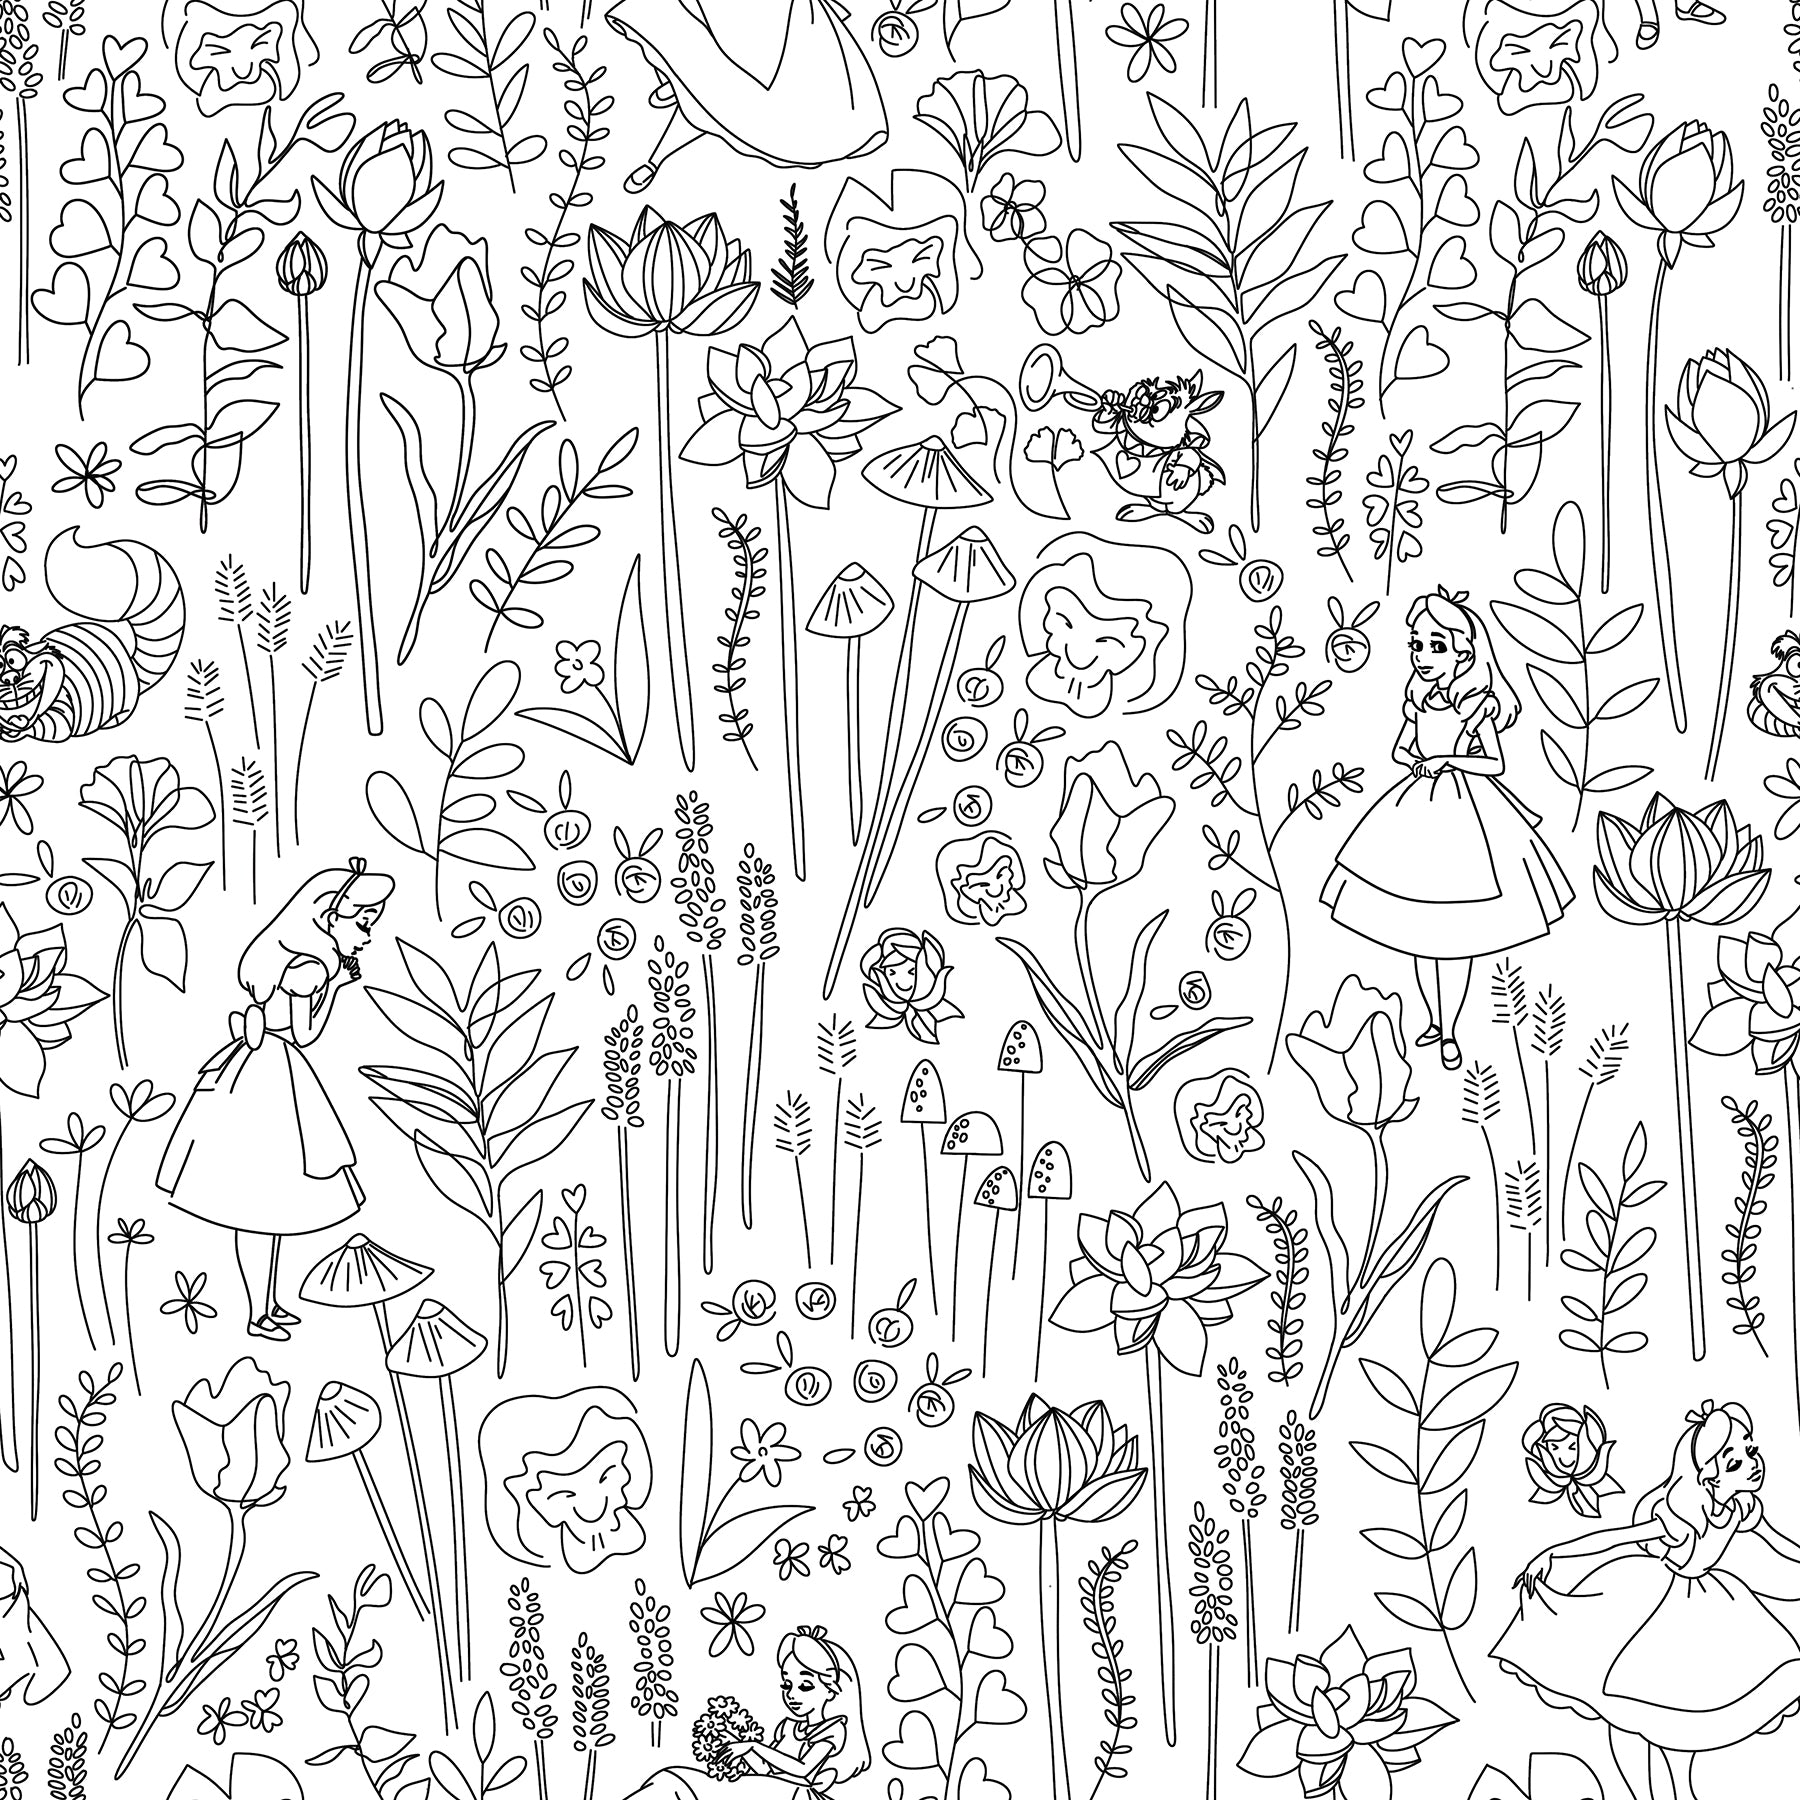 Disney Alice in Wonderland Garden Peel & Stick Wallpaper Peel and Stick Wallpaper RoomMates Roll Black 